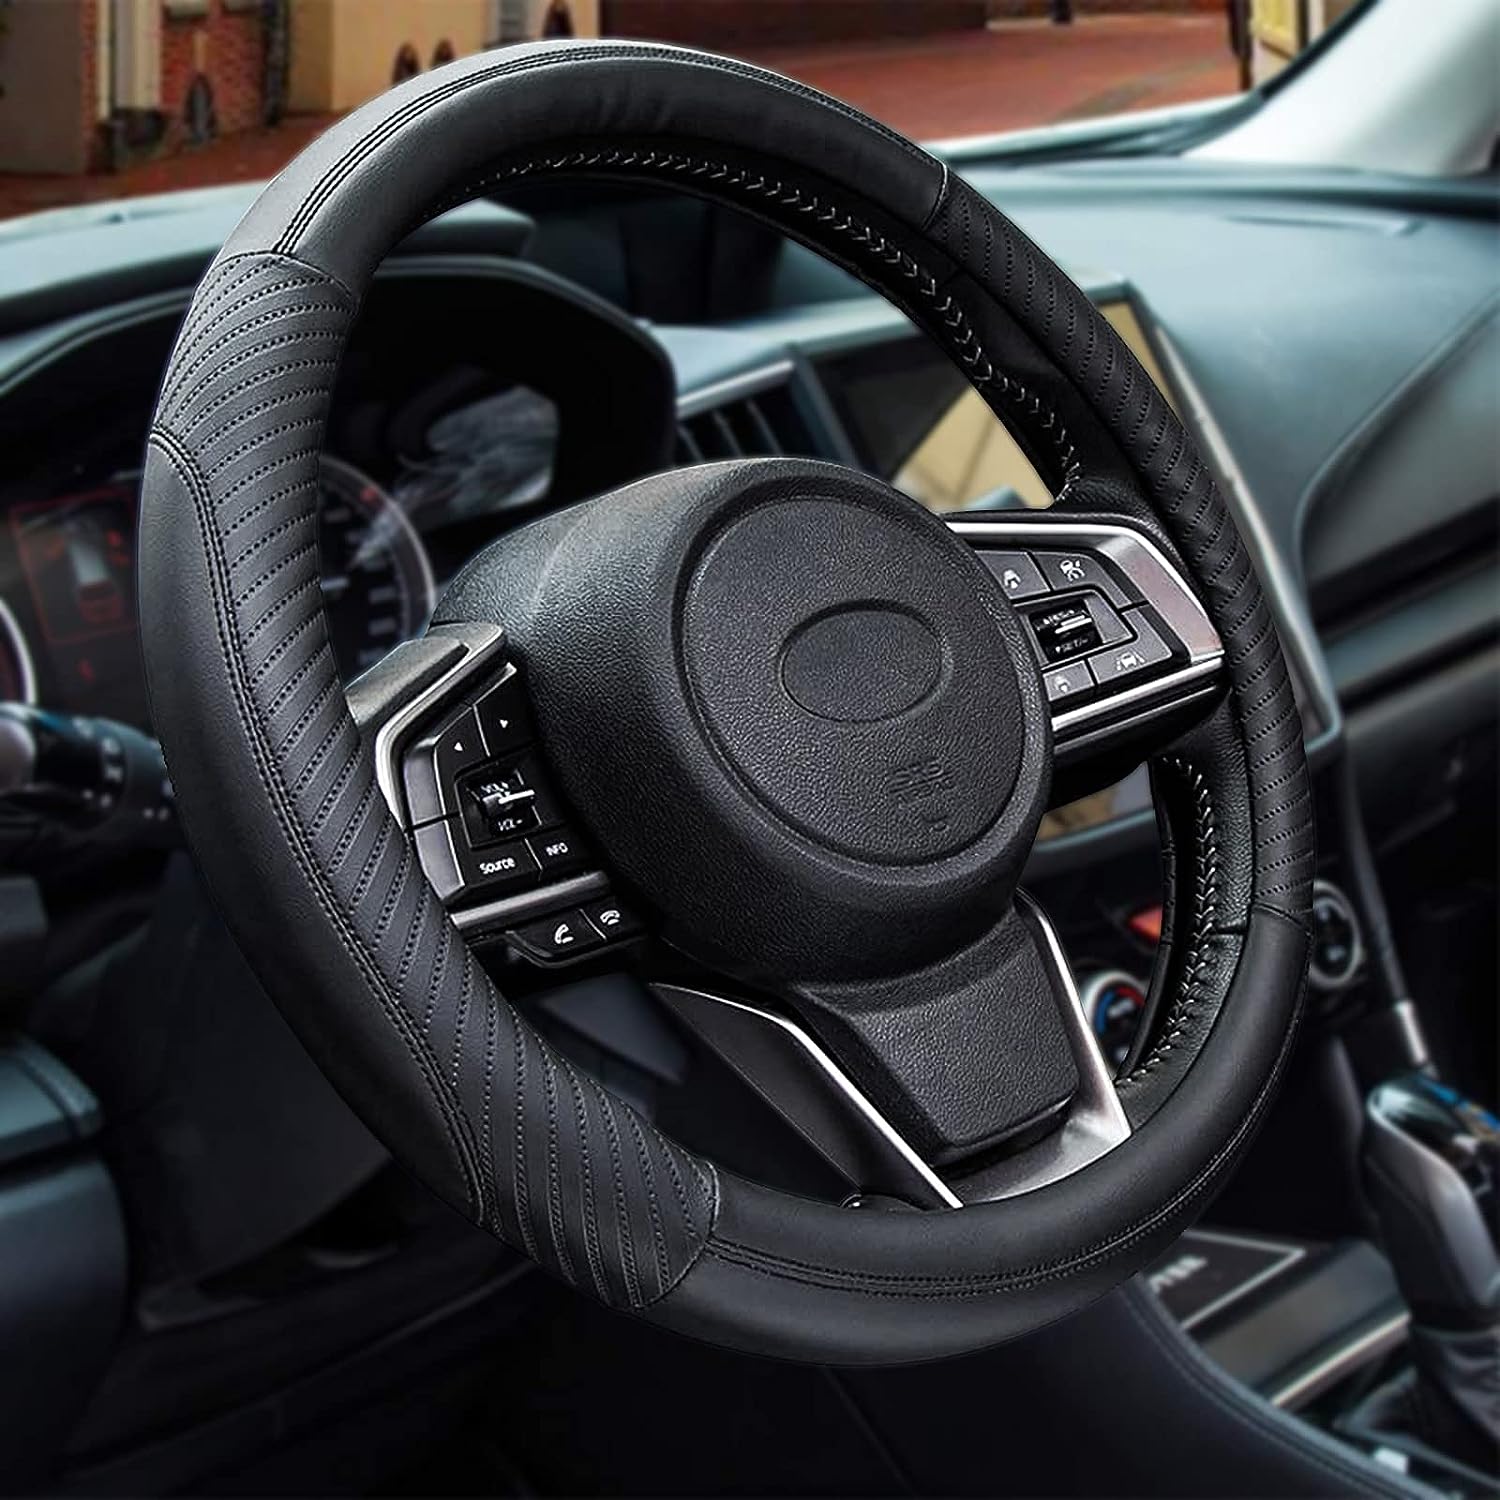 Car Steering Wheel Cover Leather - Soft Microfiber Steering Wheel Cover Universal Size M 37-38cm /14.5-15inch, Anti-slip, Breathable, Black